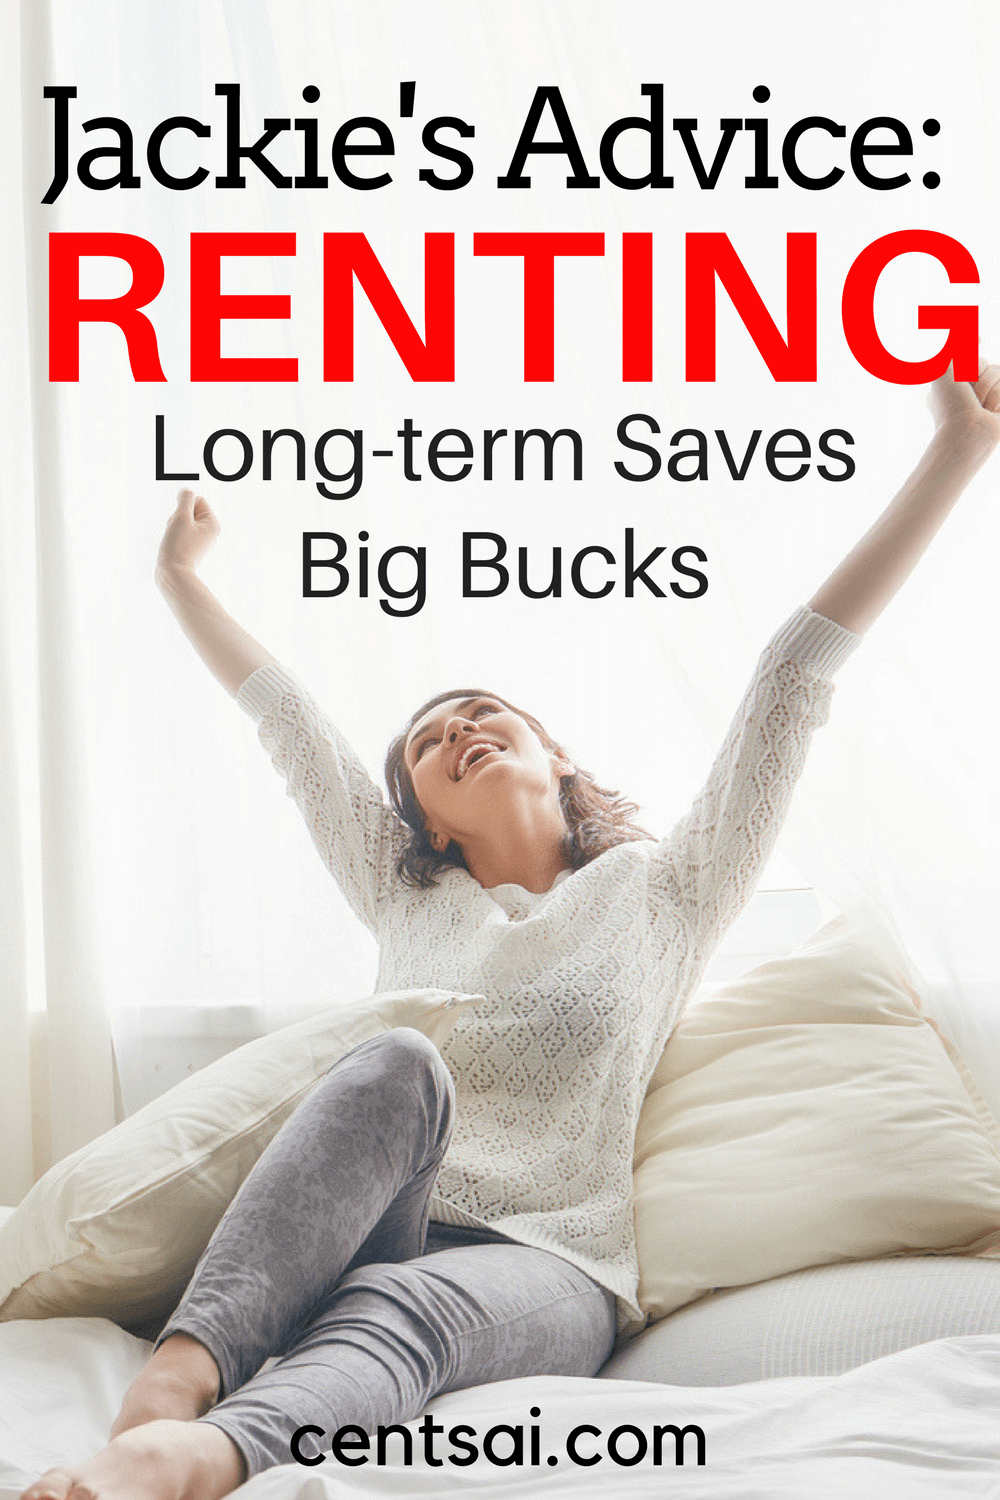 Jackie’s Advice: Renting Long-term Saves Big Bucks